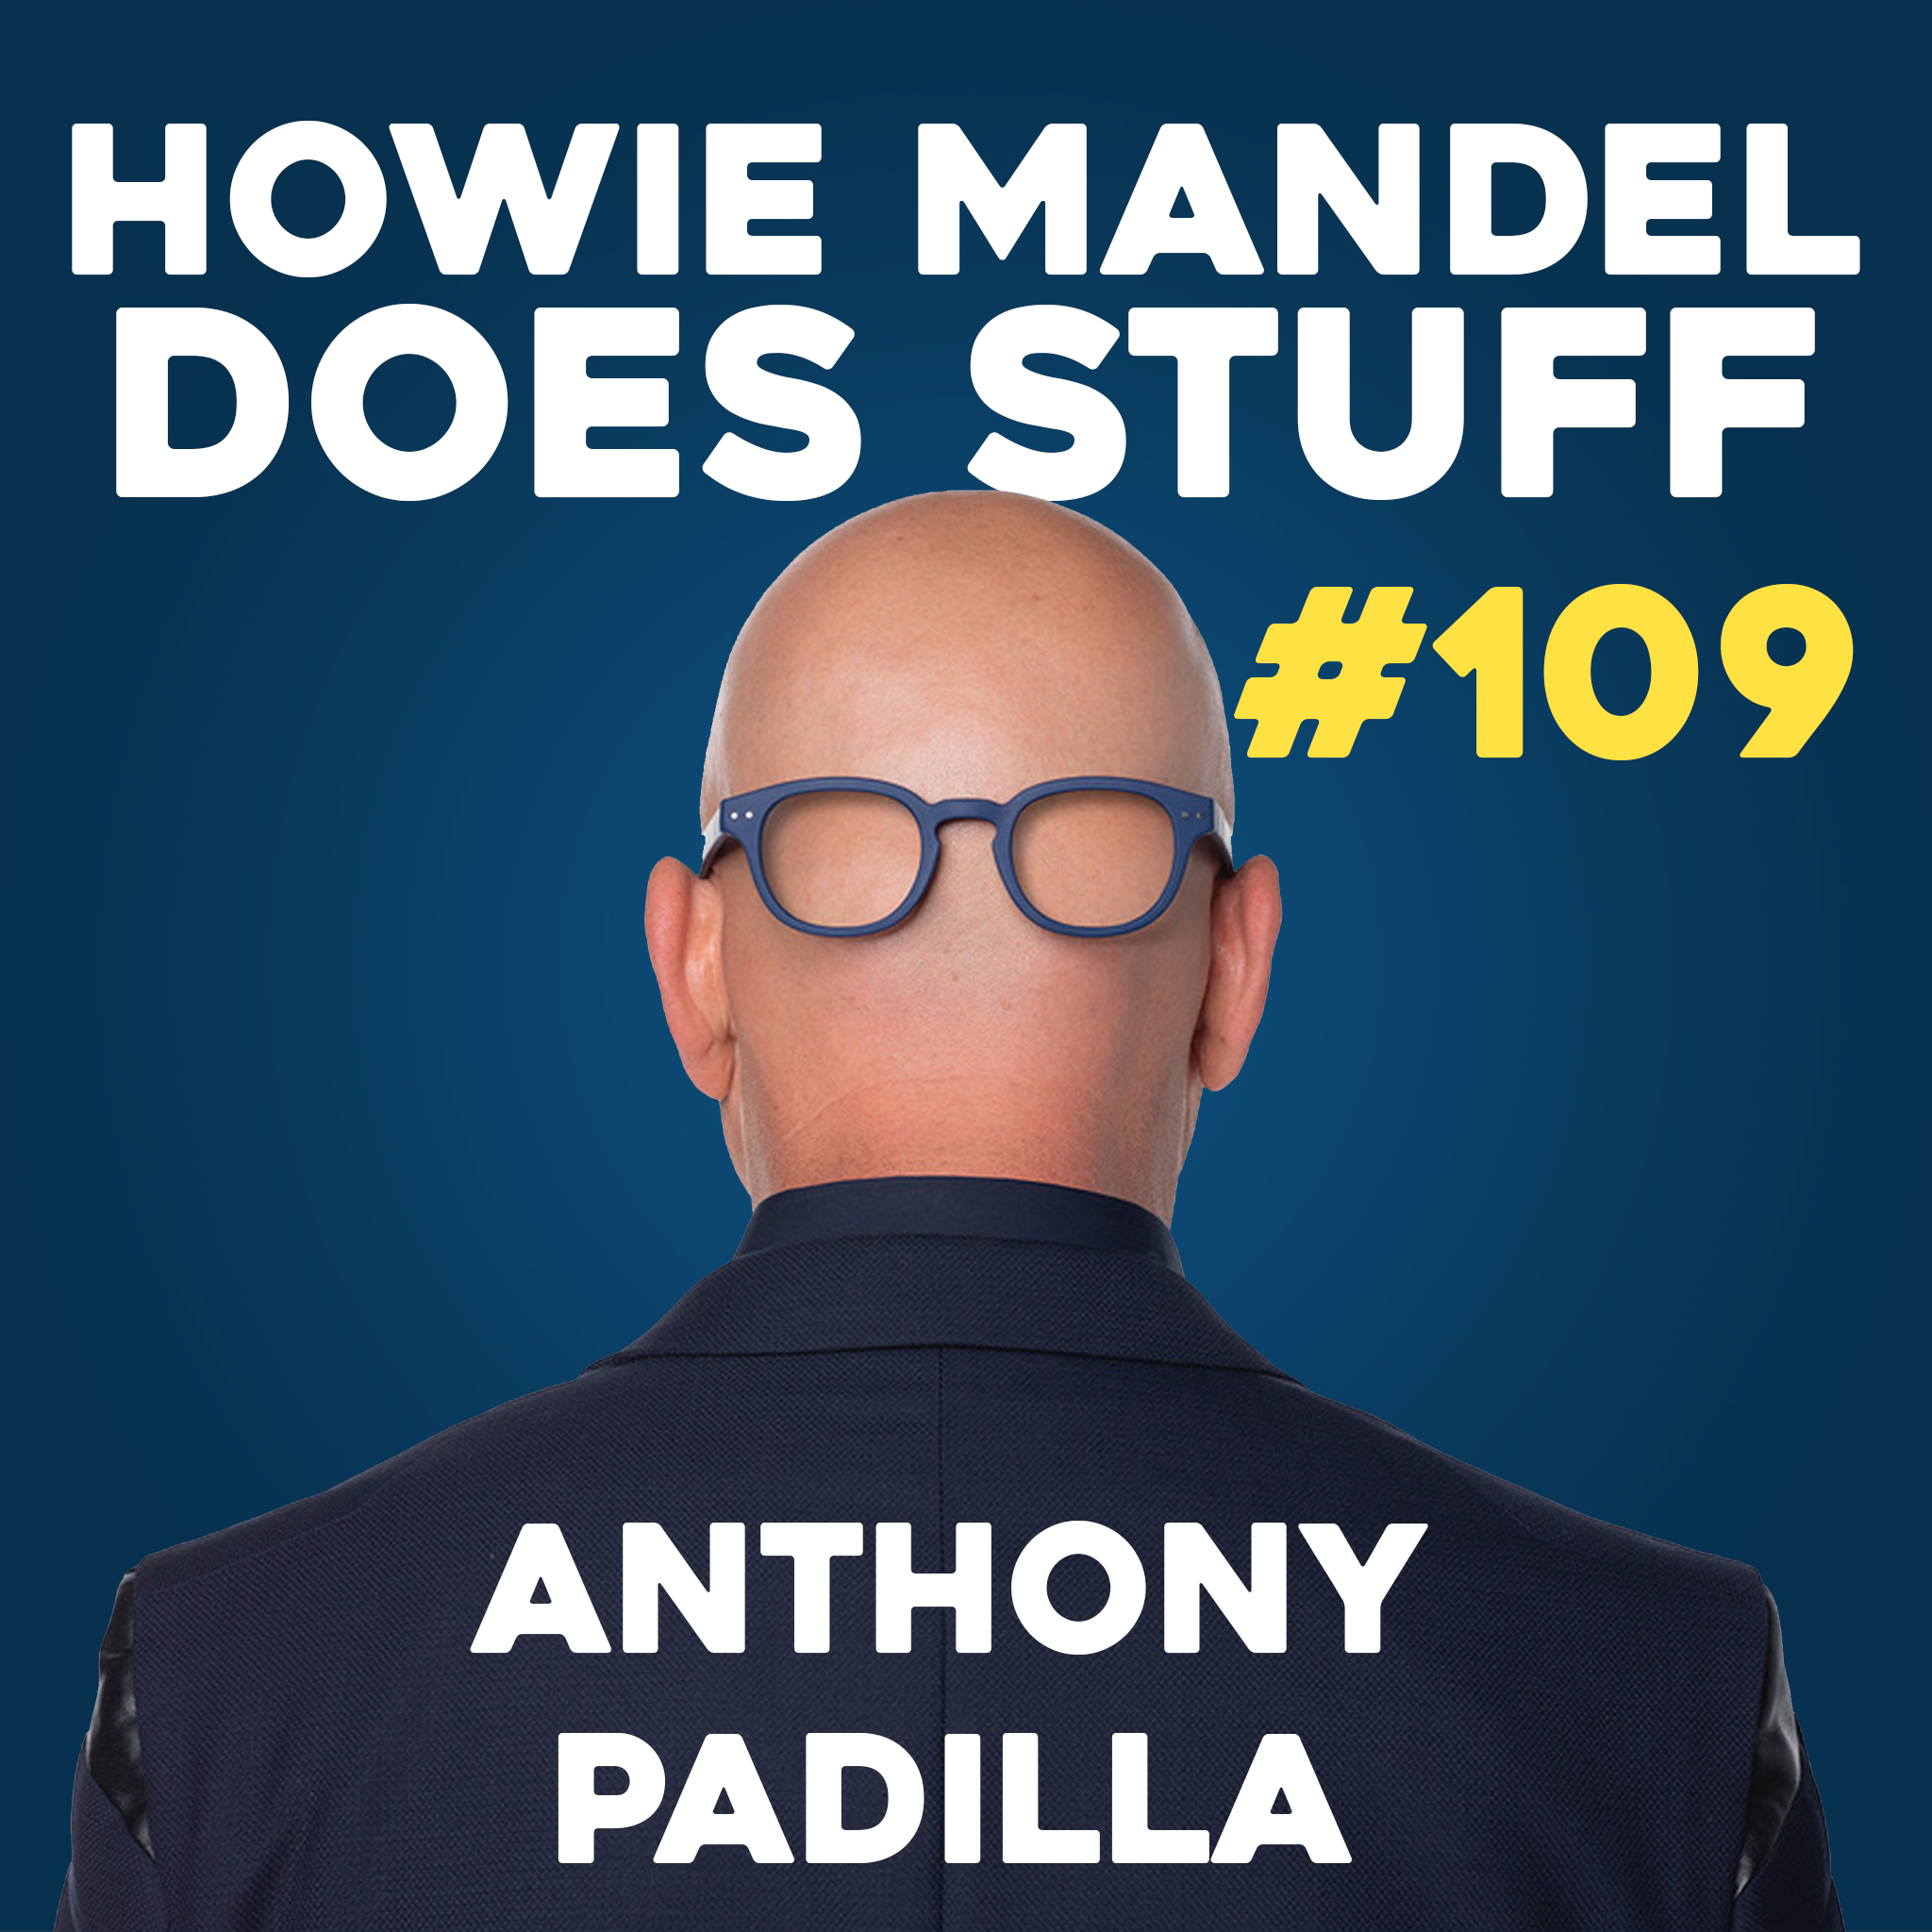 Anthony Padilla's Mental Struggle After Quitting SMOSH | Howie Mandel Does Stuff #109